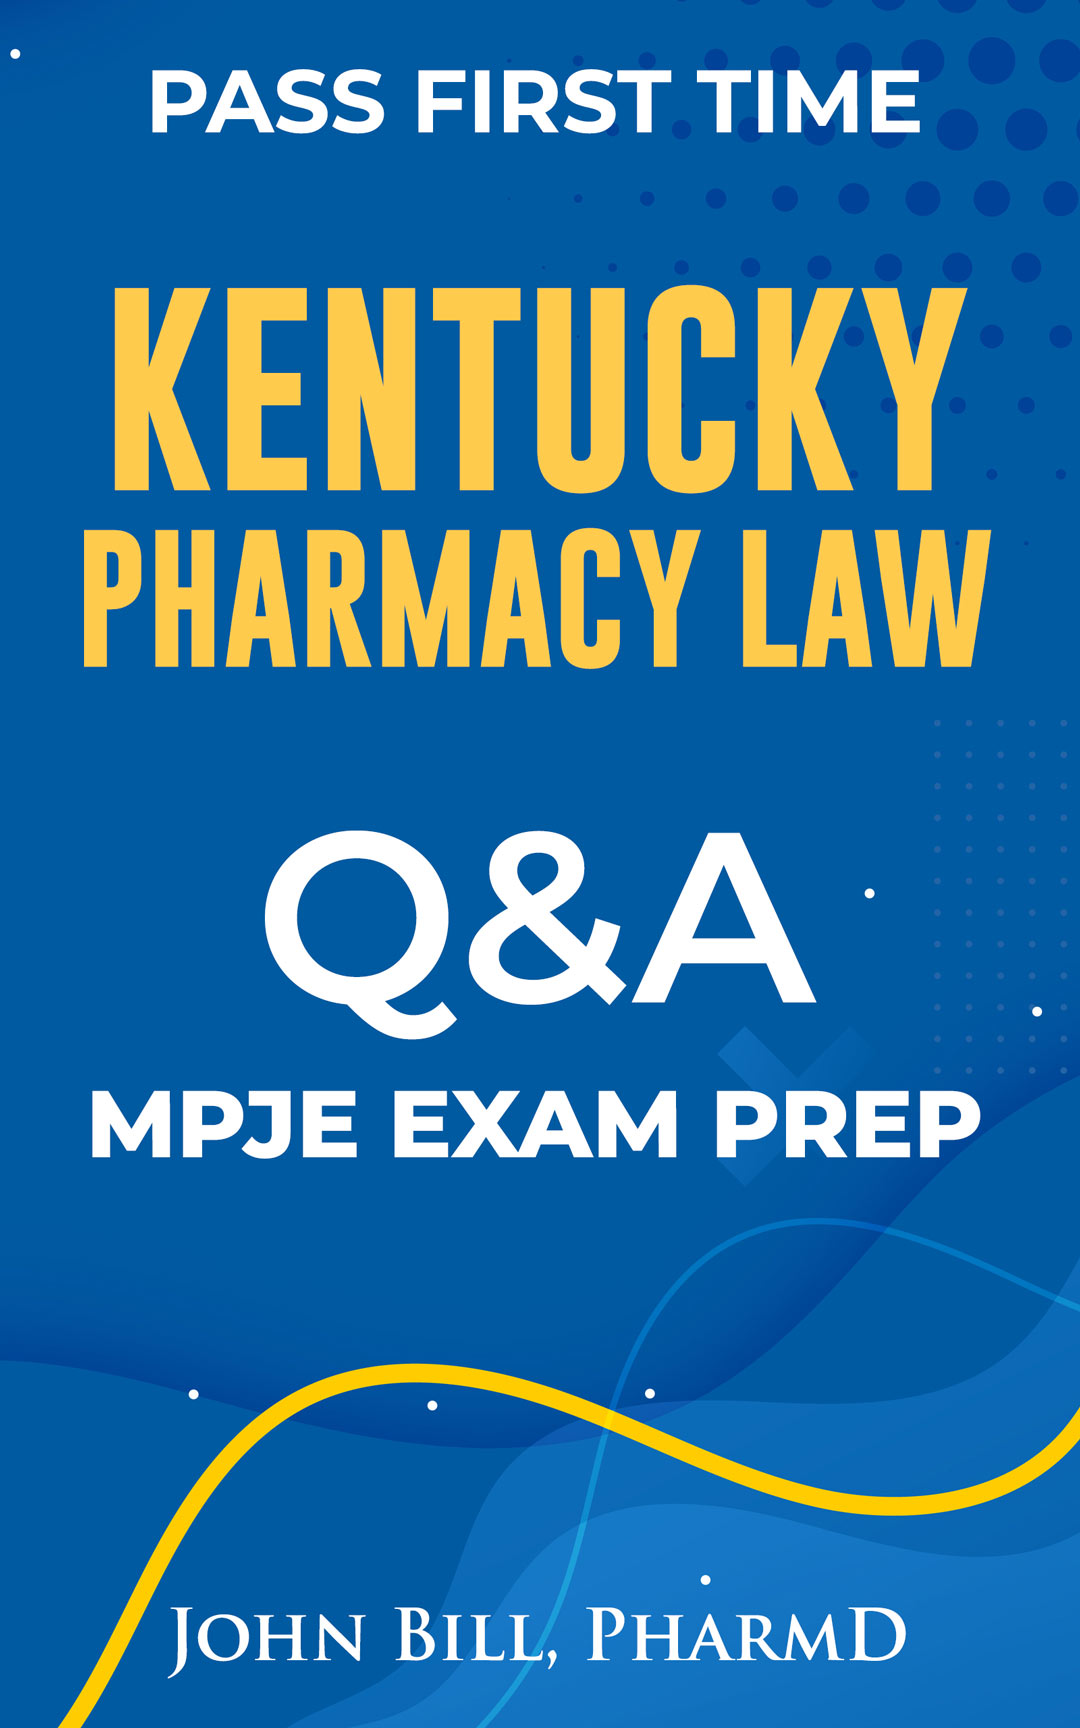 Kentucky Pharmacy Law MPJE Exam Prep Q & A